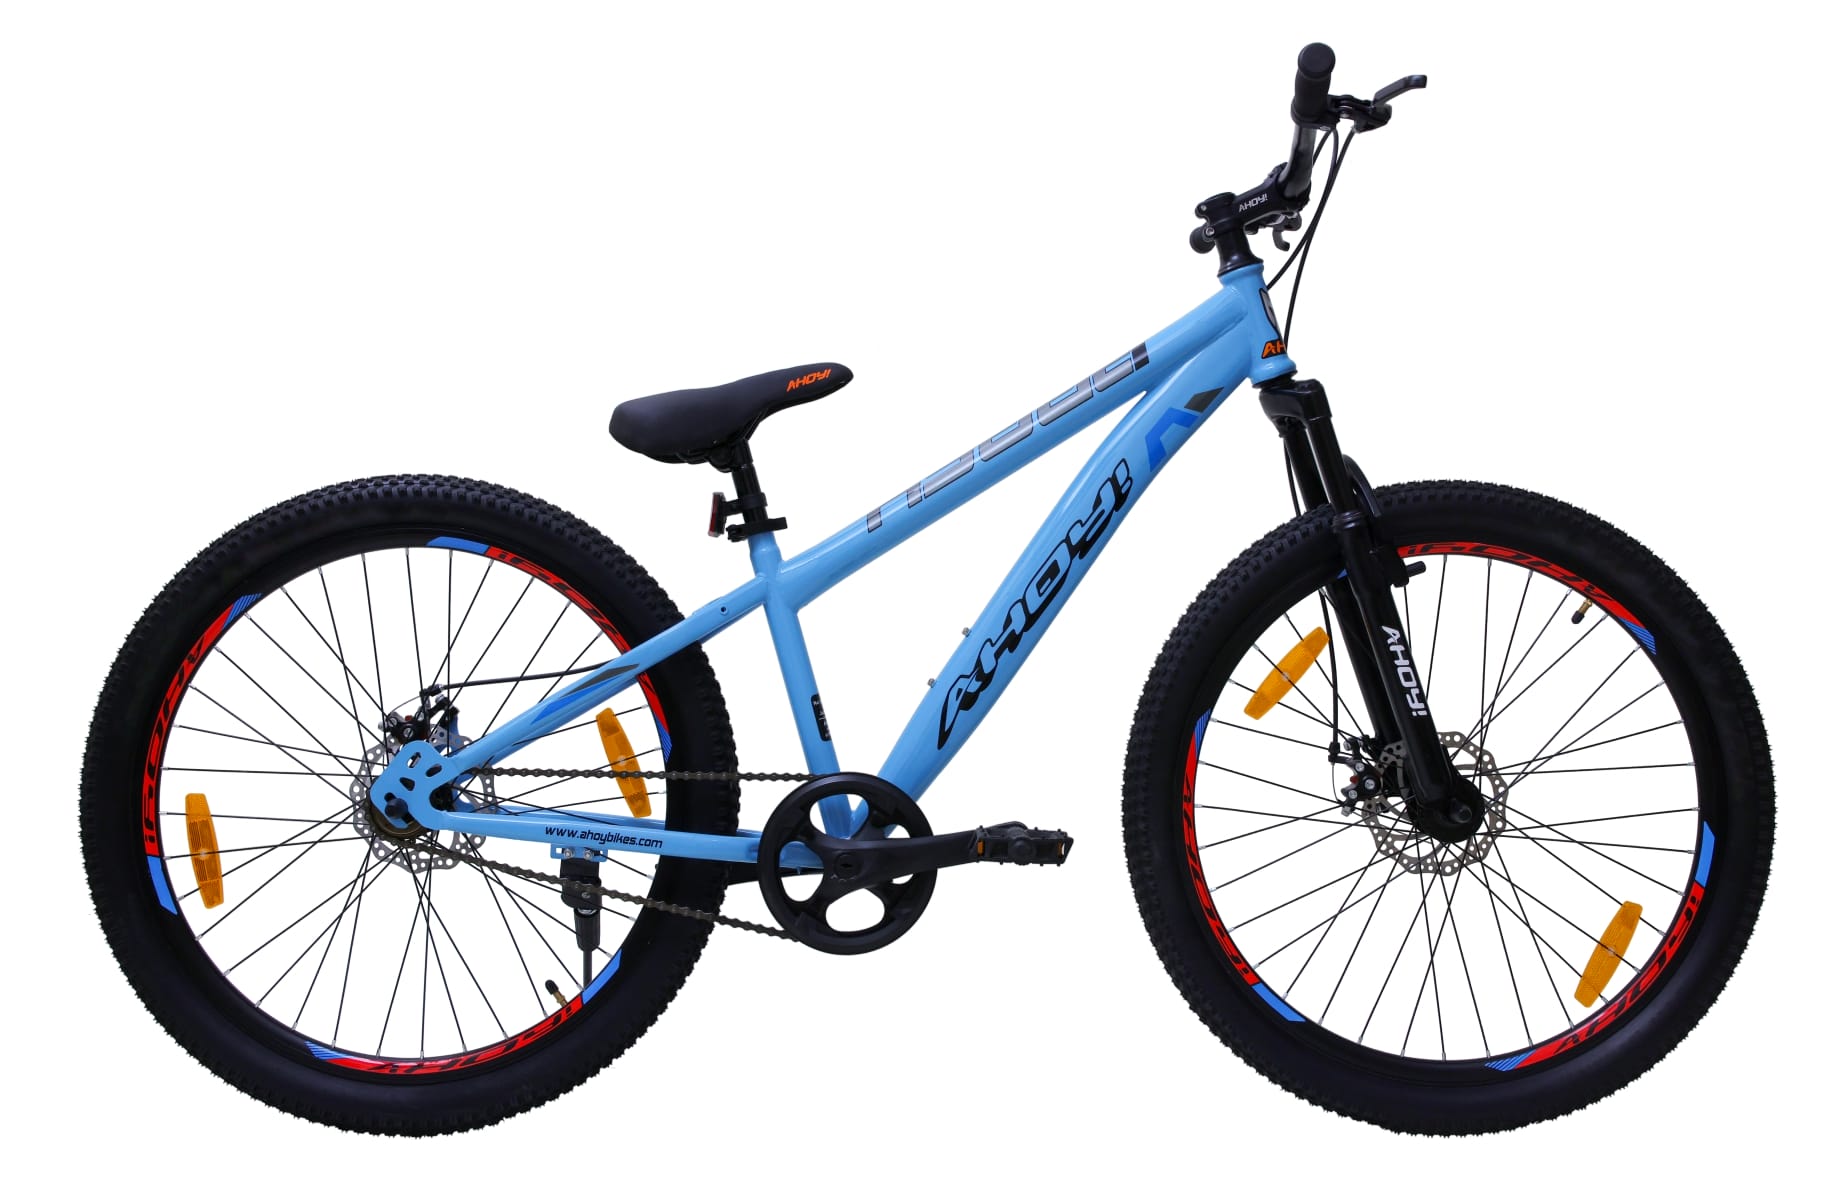 Brash Non Gear Bike 26T | Buy Blue Single Speed Bicycle for Men